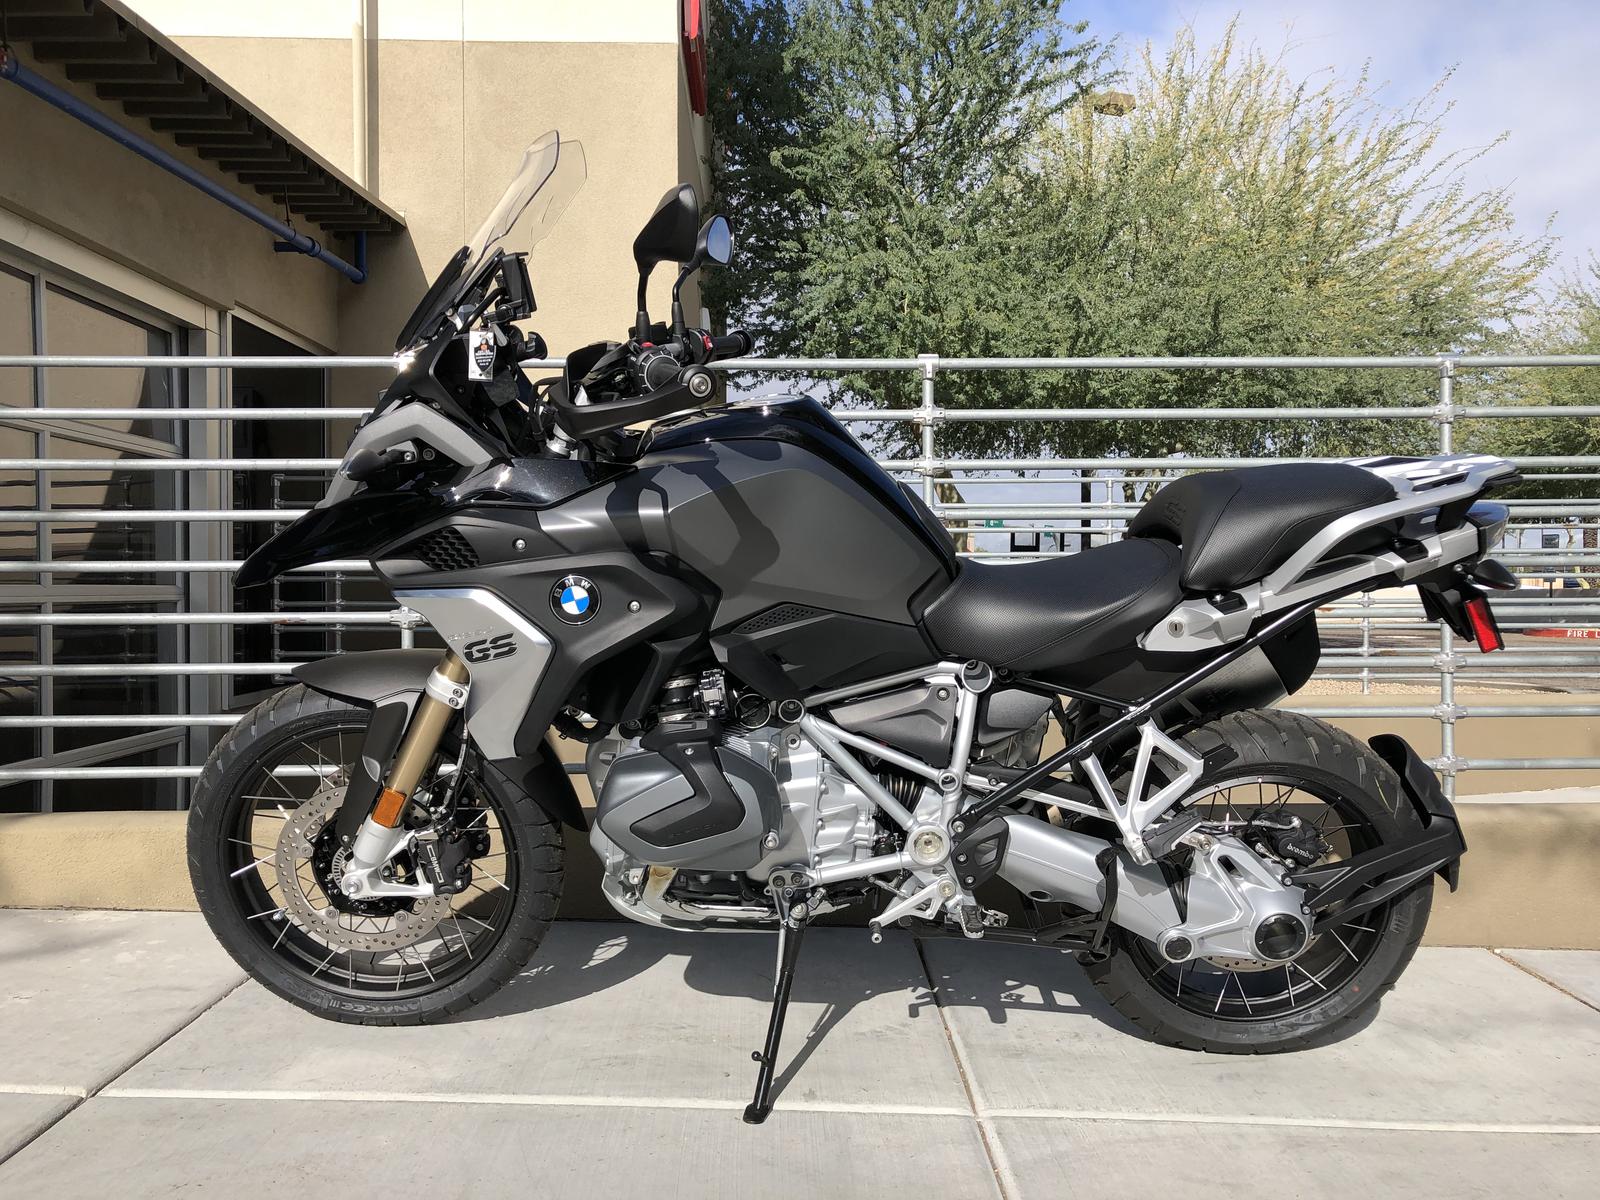 BMW R1250GS in Peoria, AZ. GO AZ Motorcycles